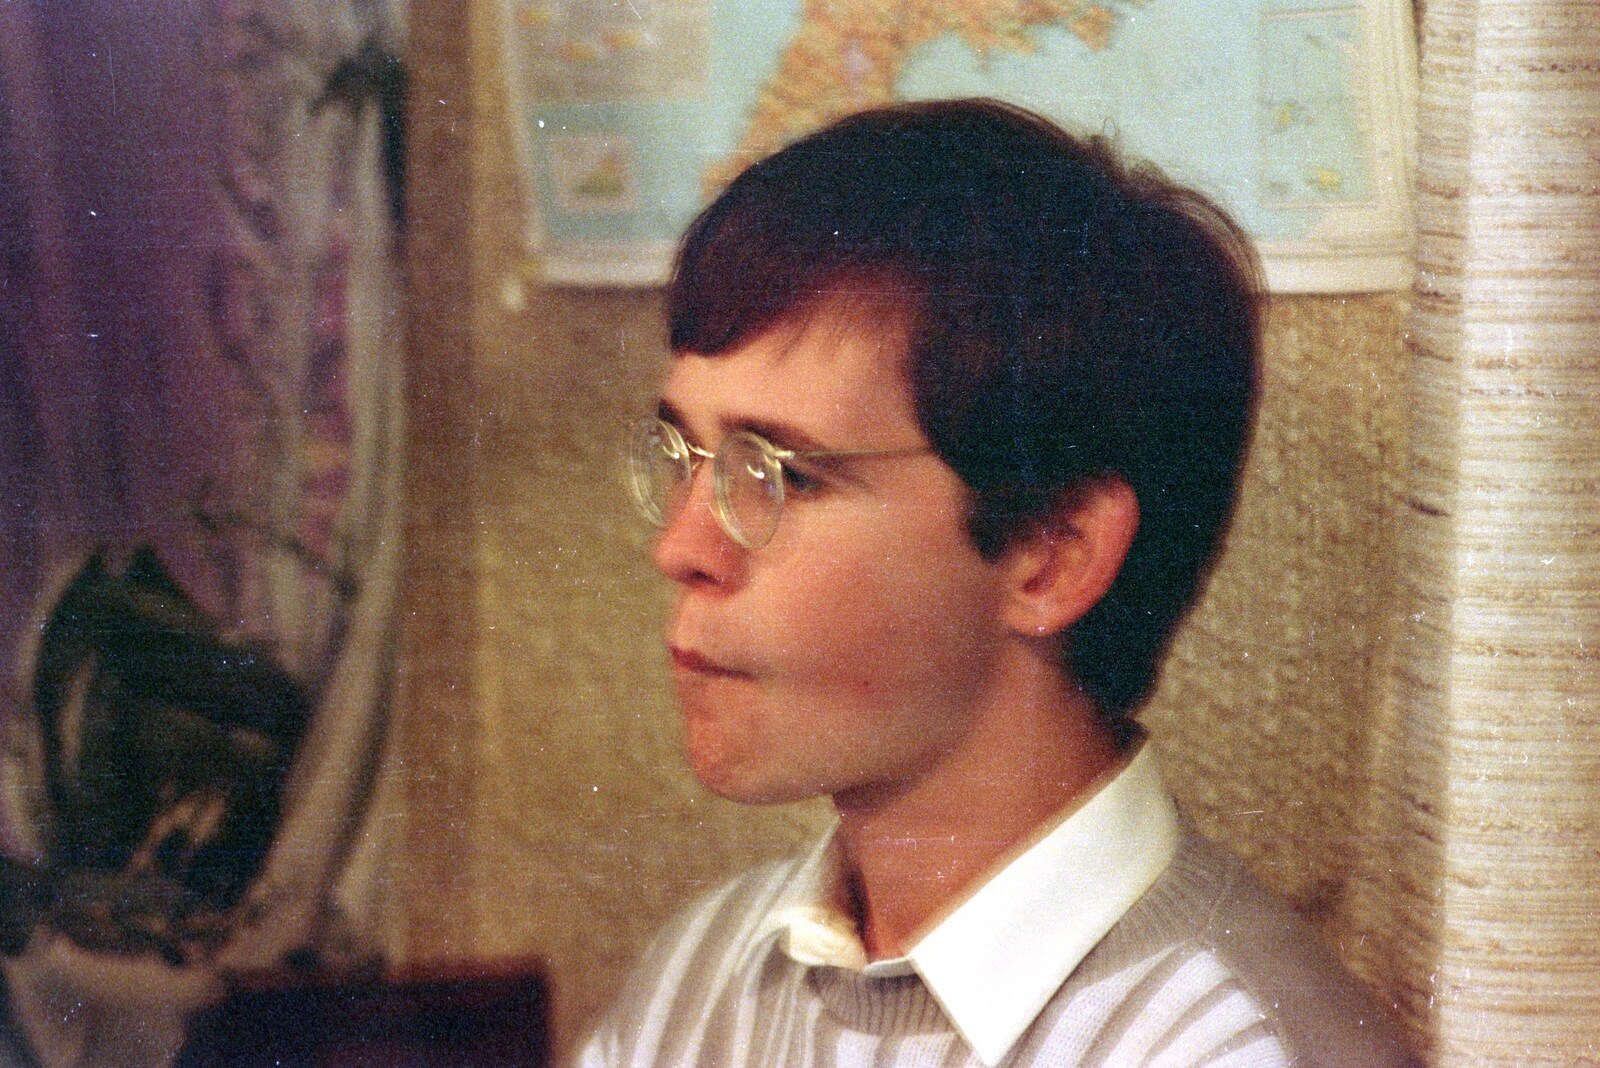 Phil ponders something from Bracken Way, Walkford, Dorset - 15th September 1986